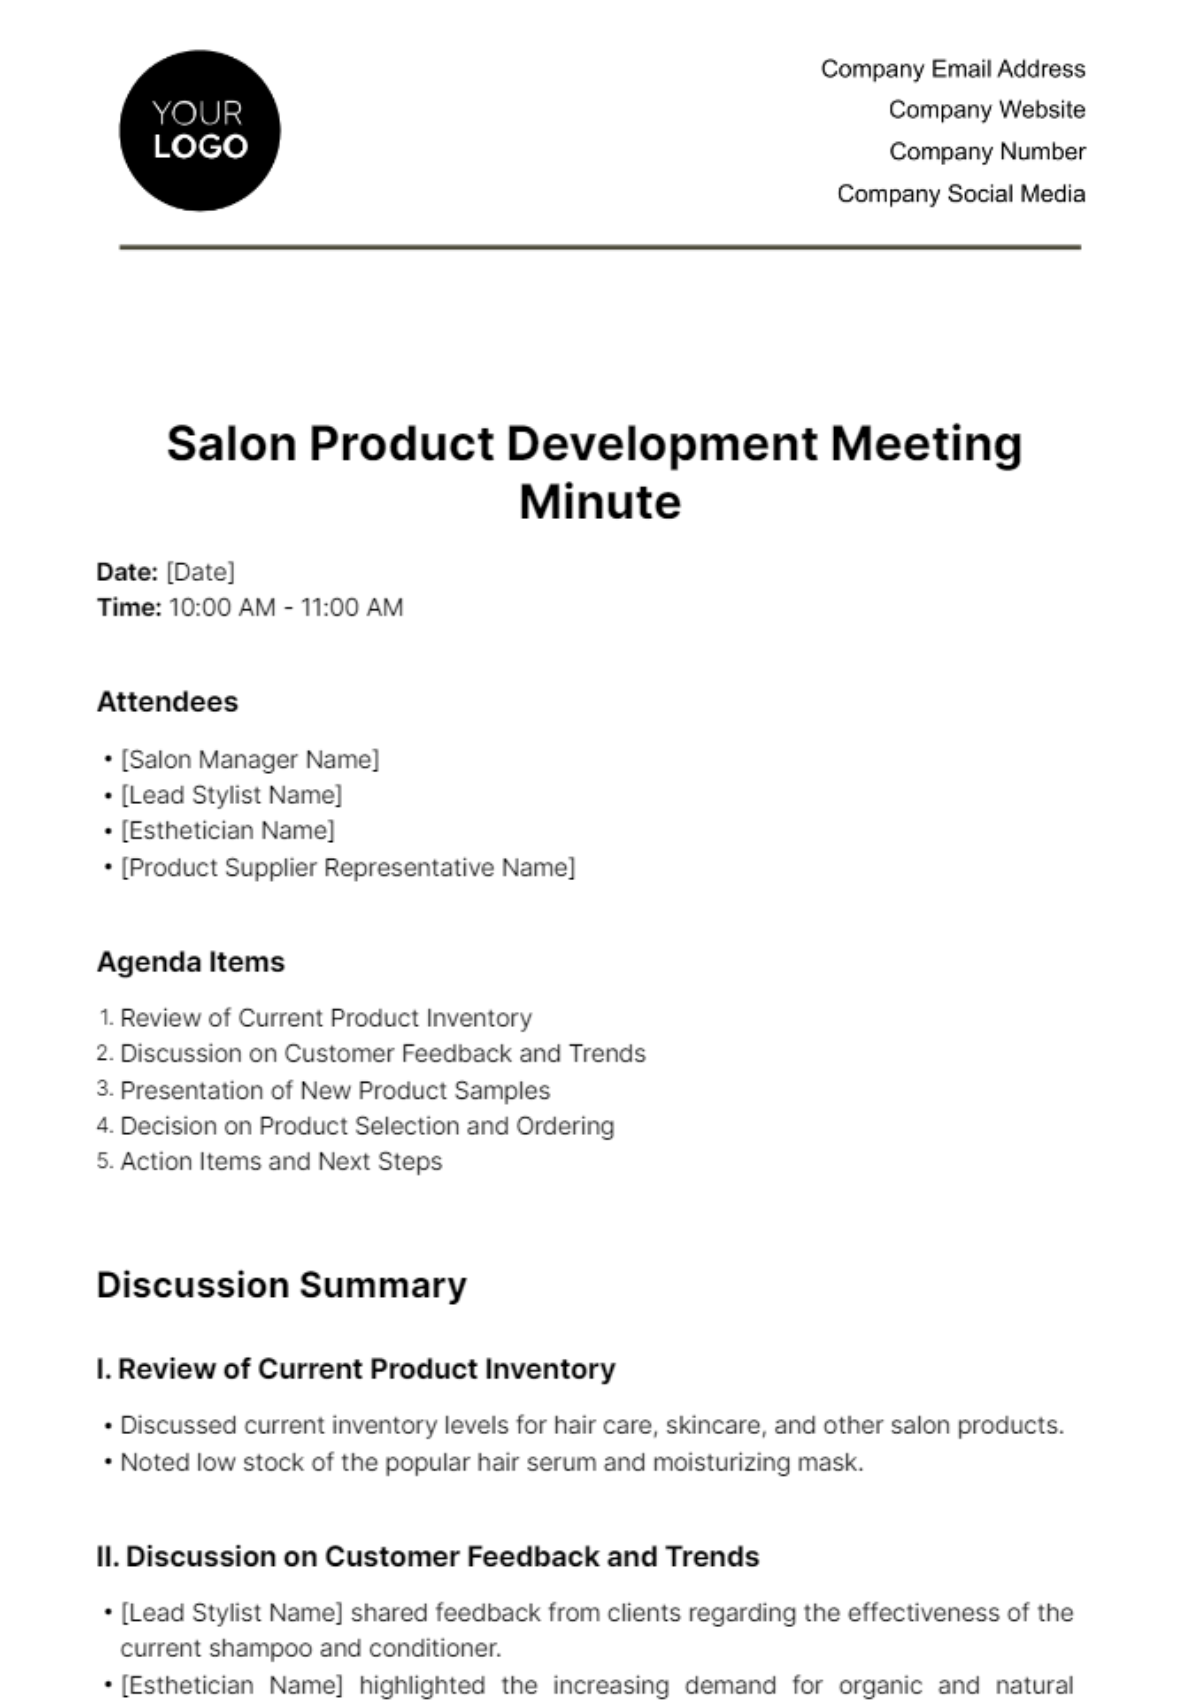 Salon Product Development Meeting Minute Template